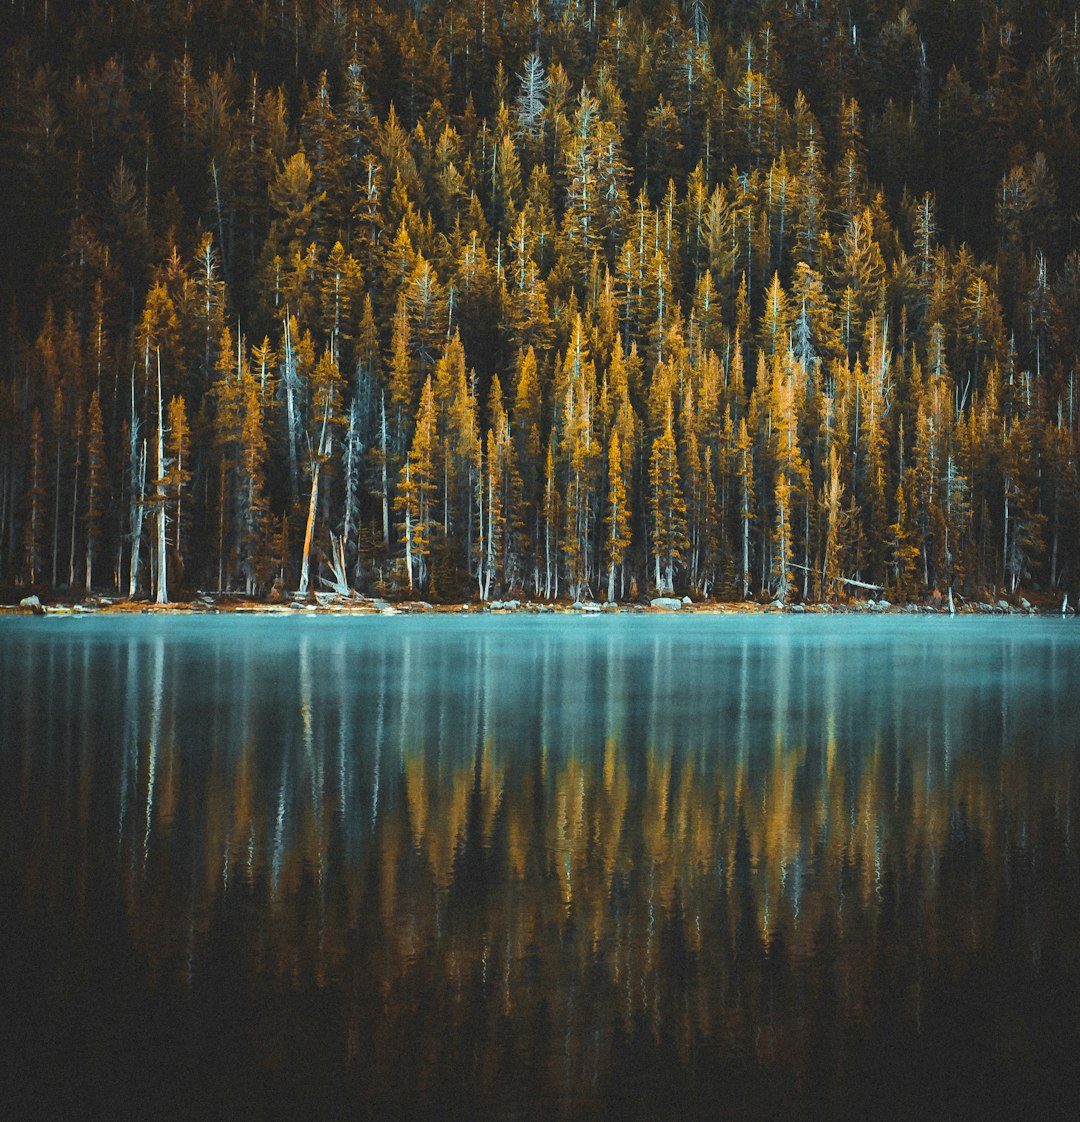 trees near body of water